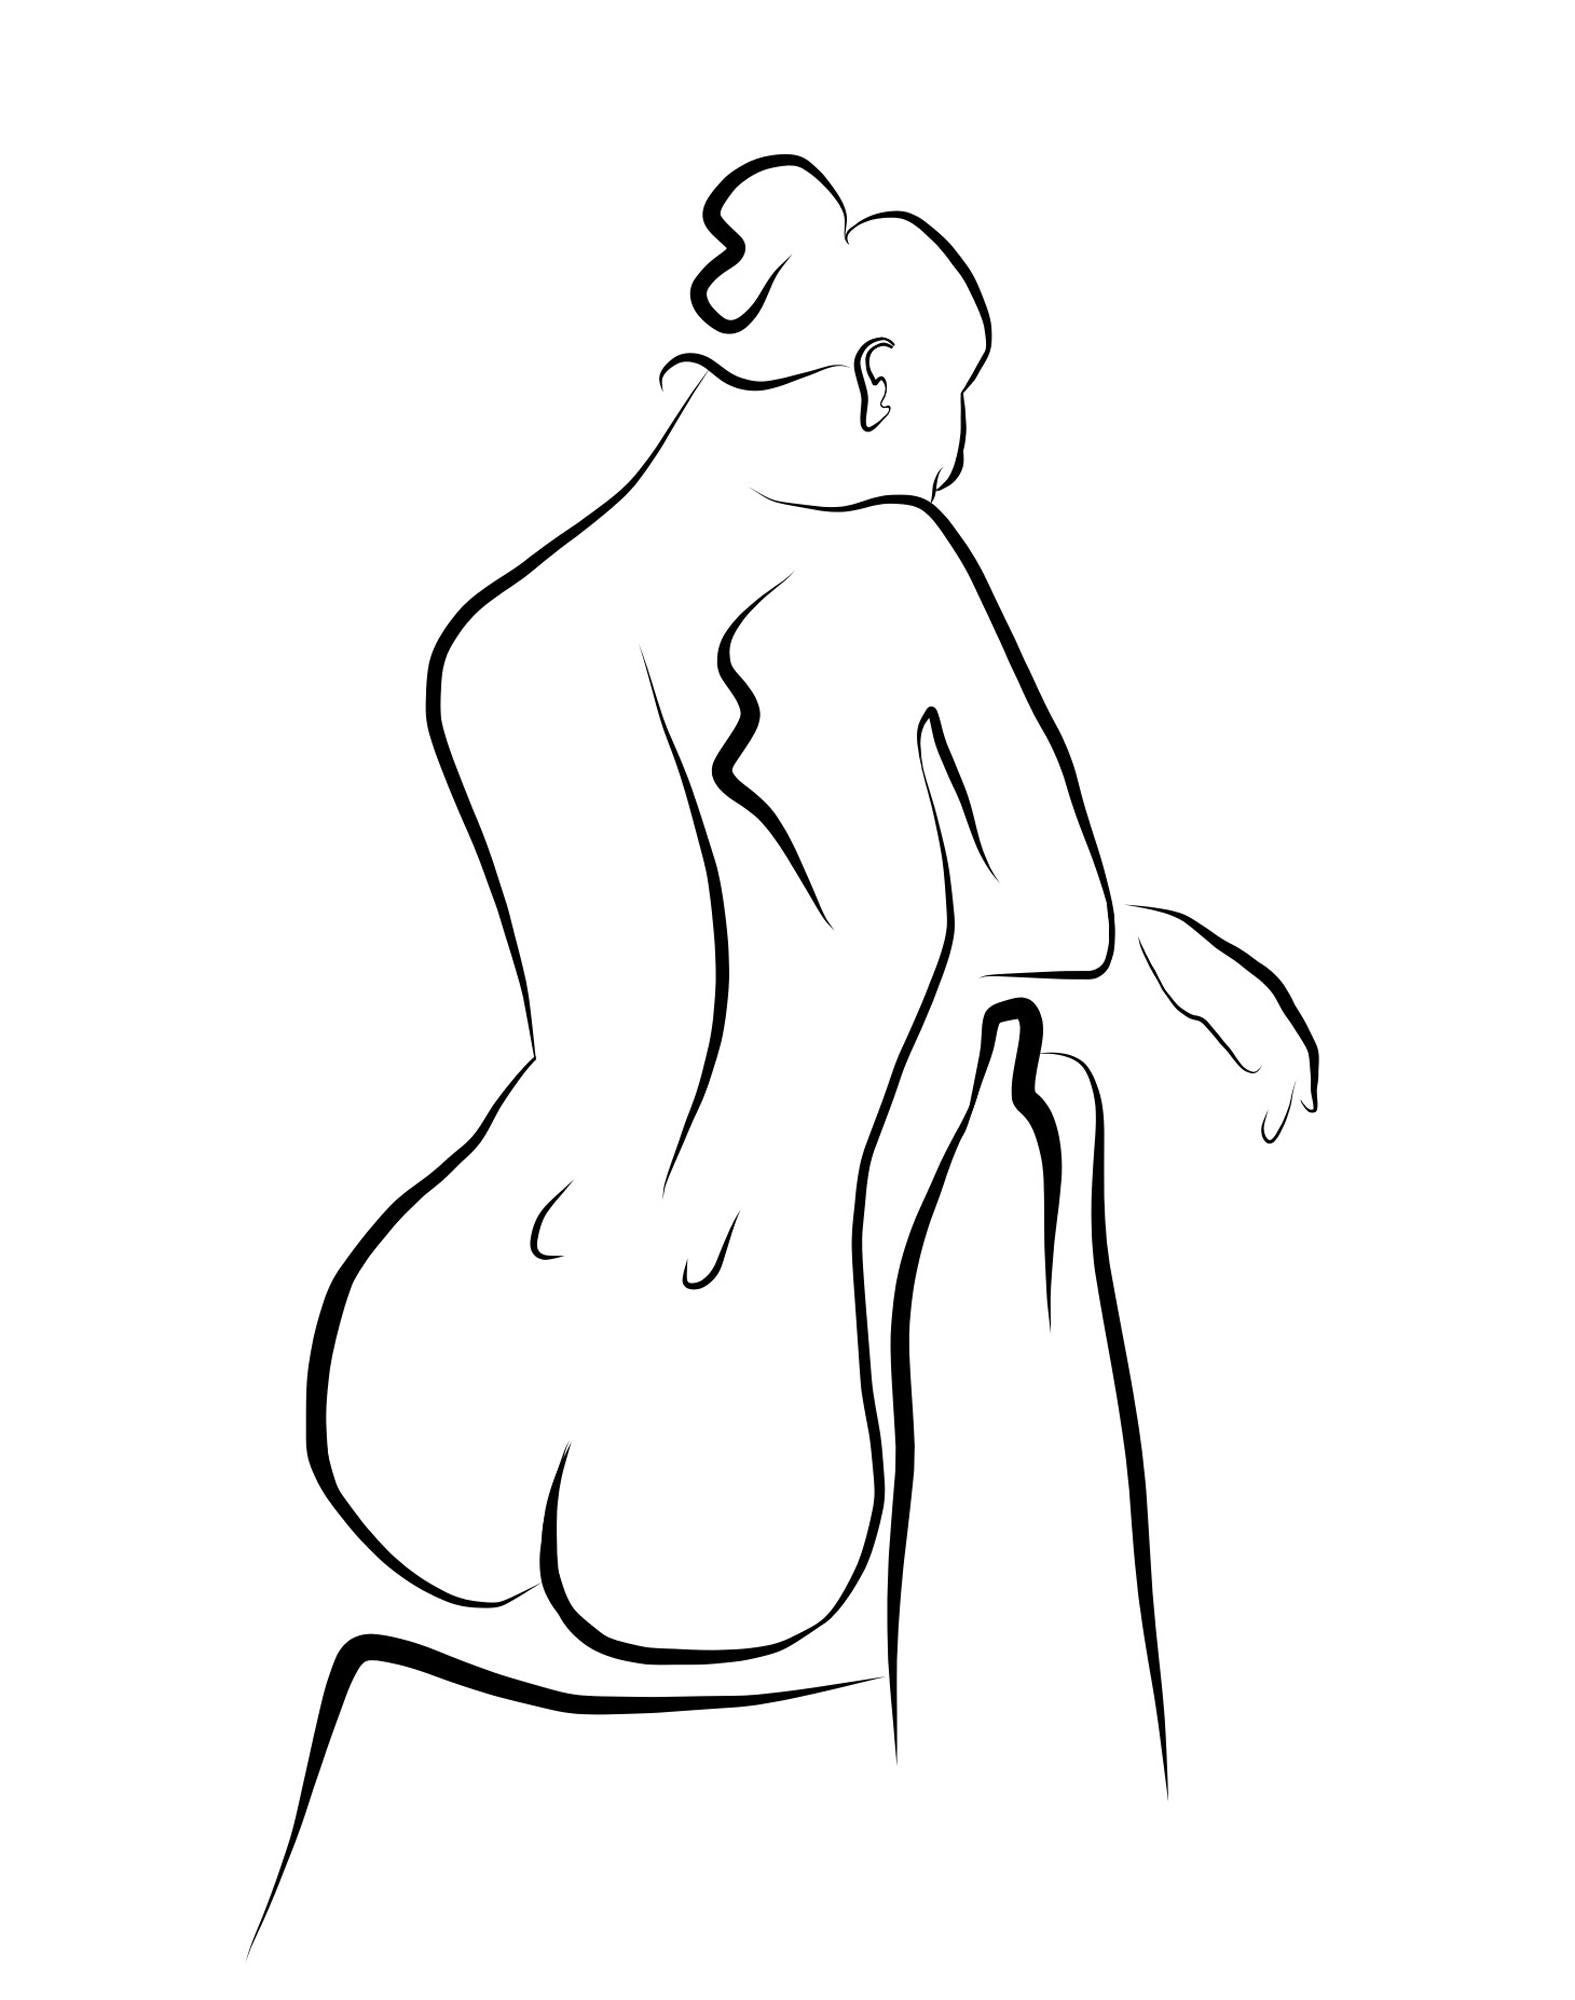 Haiku #57 - Digital Vector Drawing Seated Female Nude From Rear